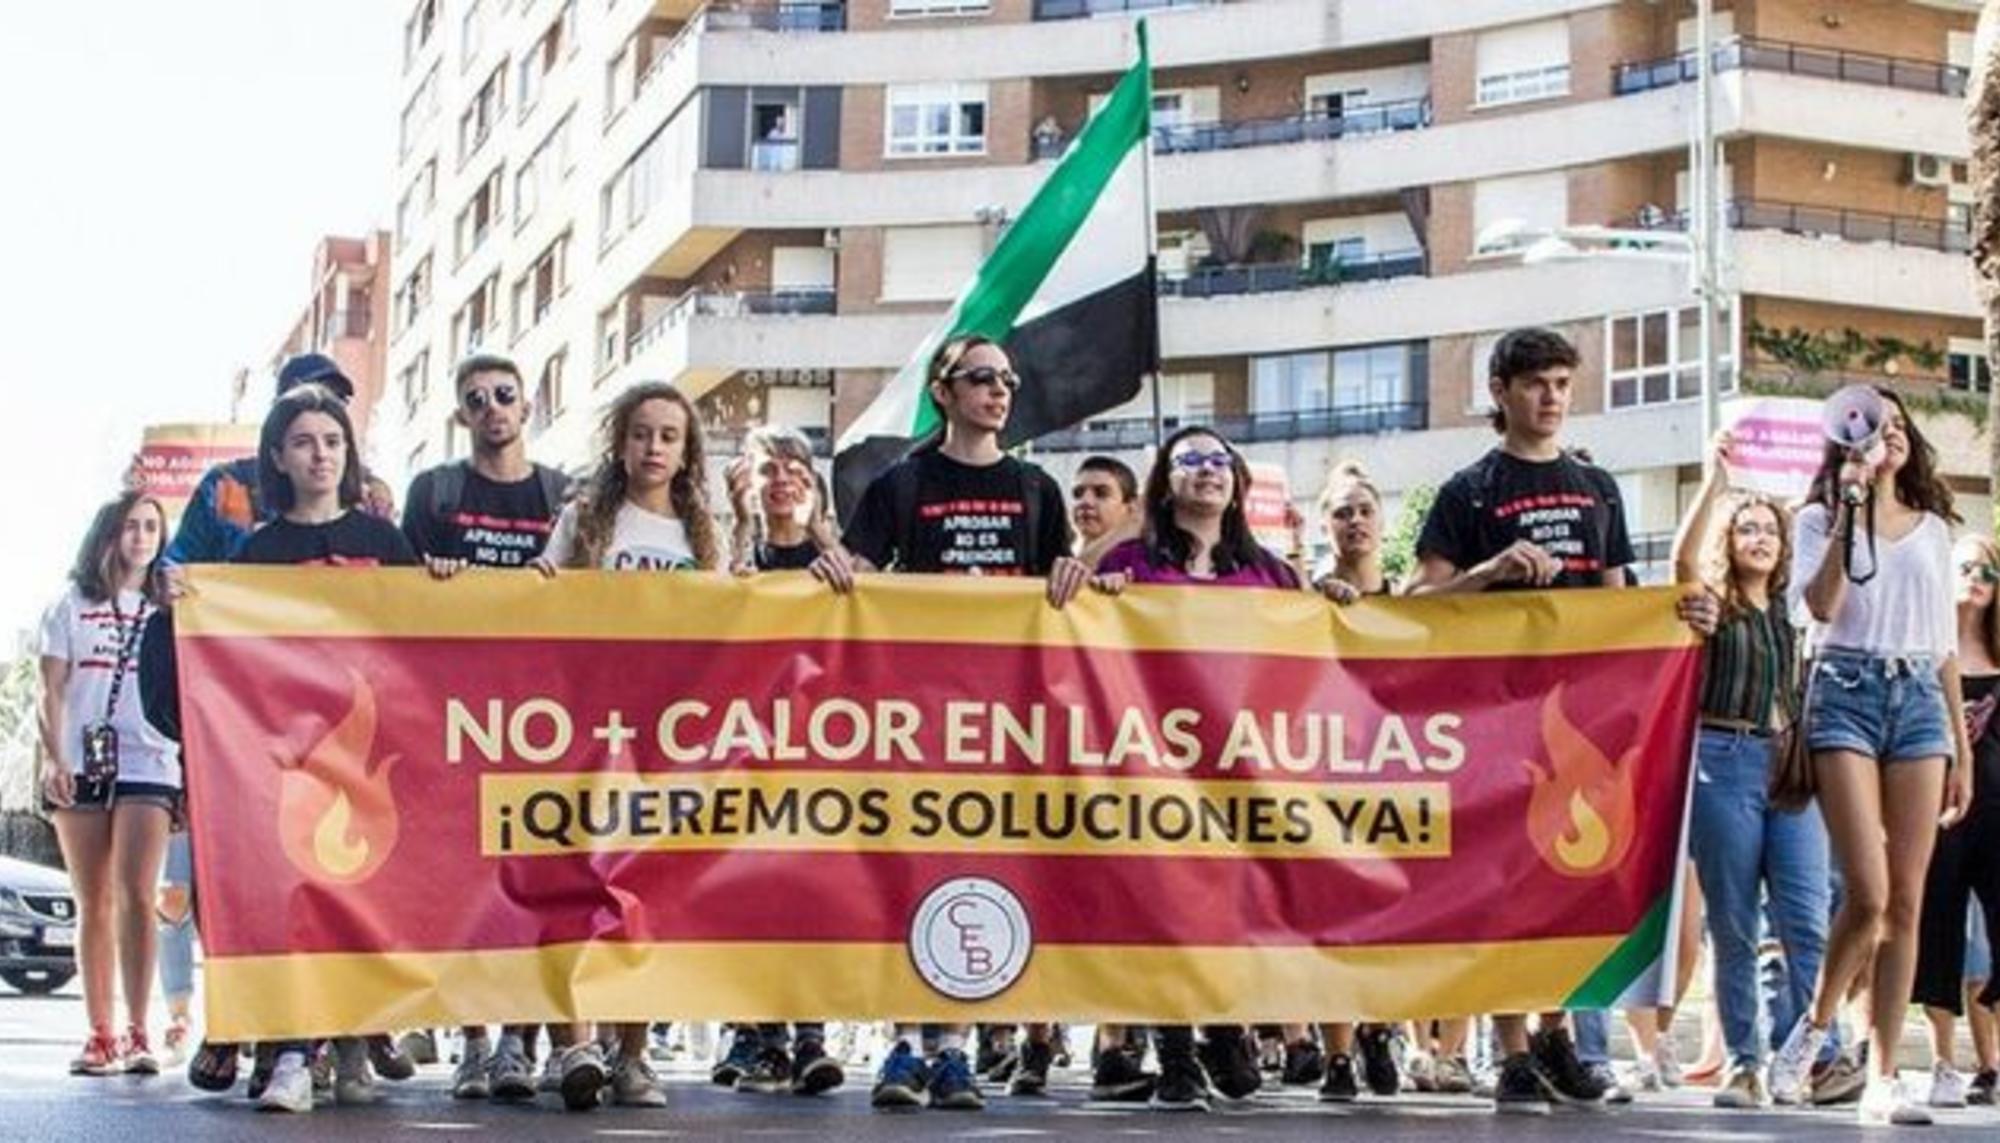 Protesta calor aulas Extremadura